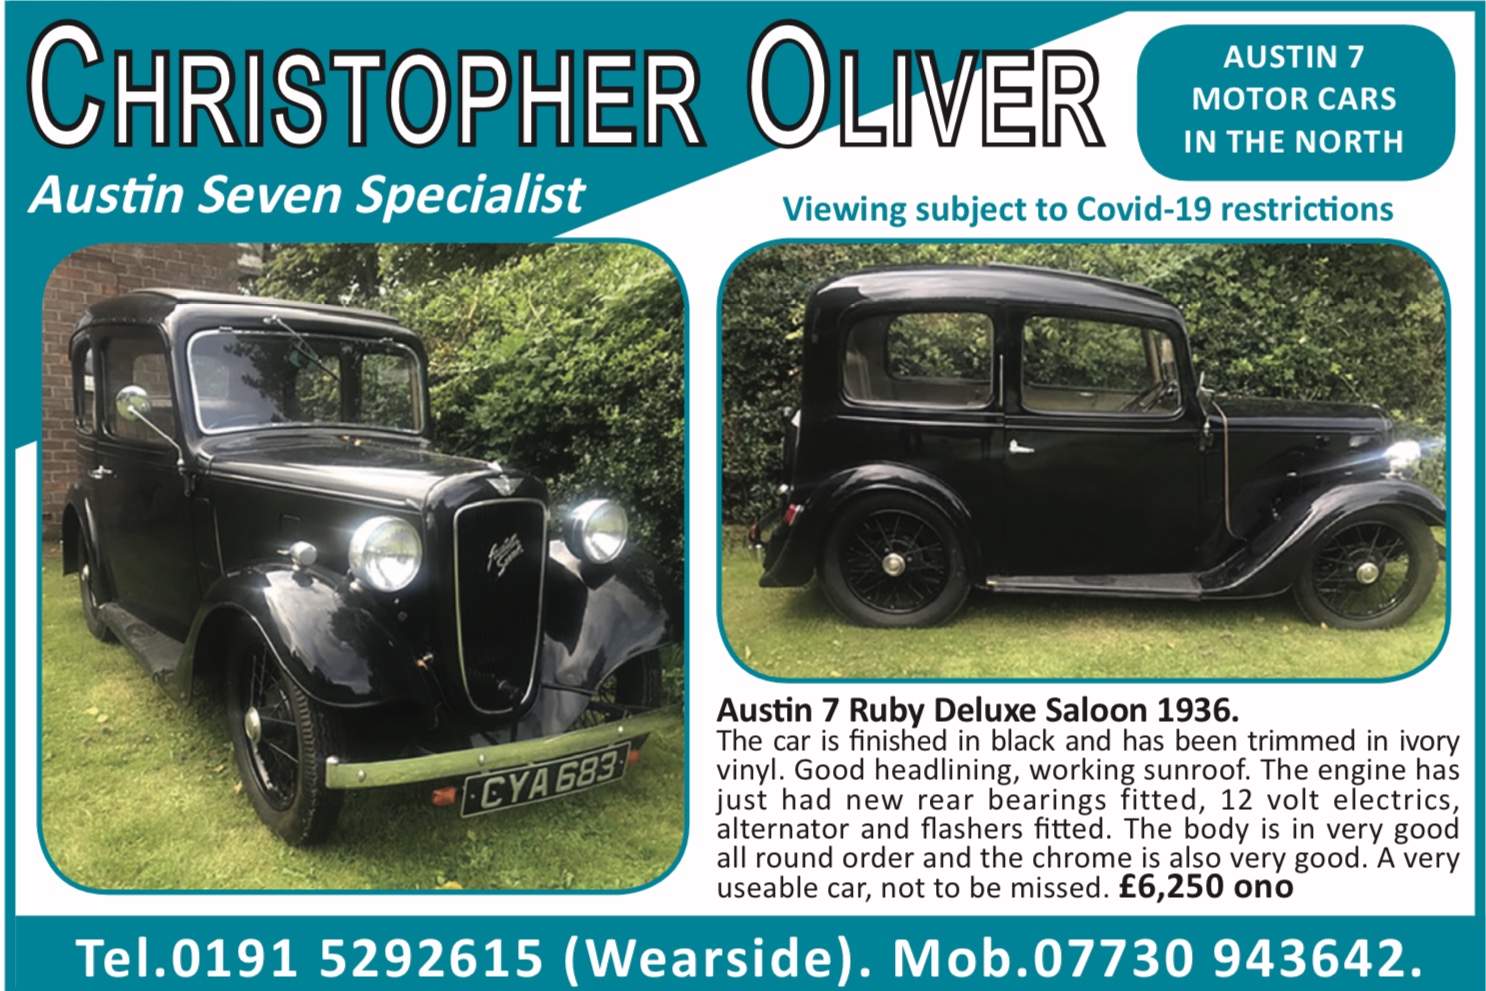 Christopher Oliver - Austin 7 Specialist, post-vintage classic cars